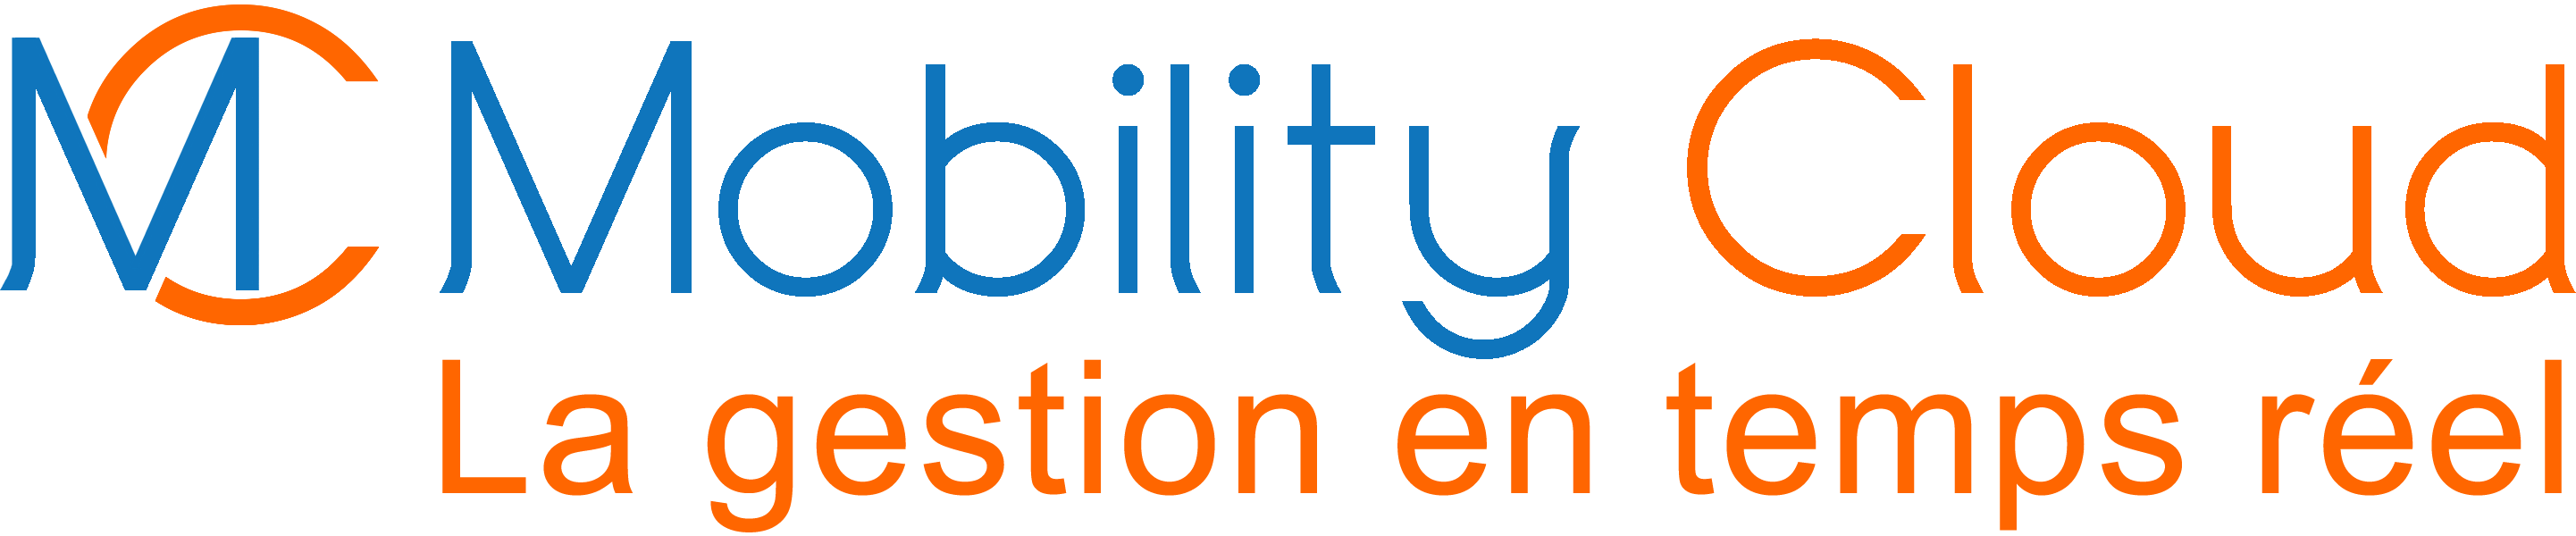 Mobility Cloud Logo